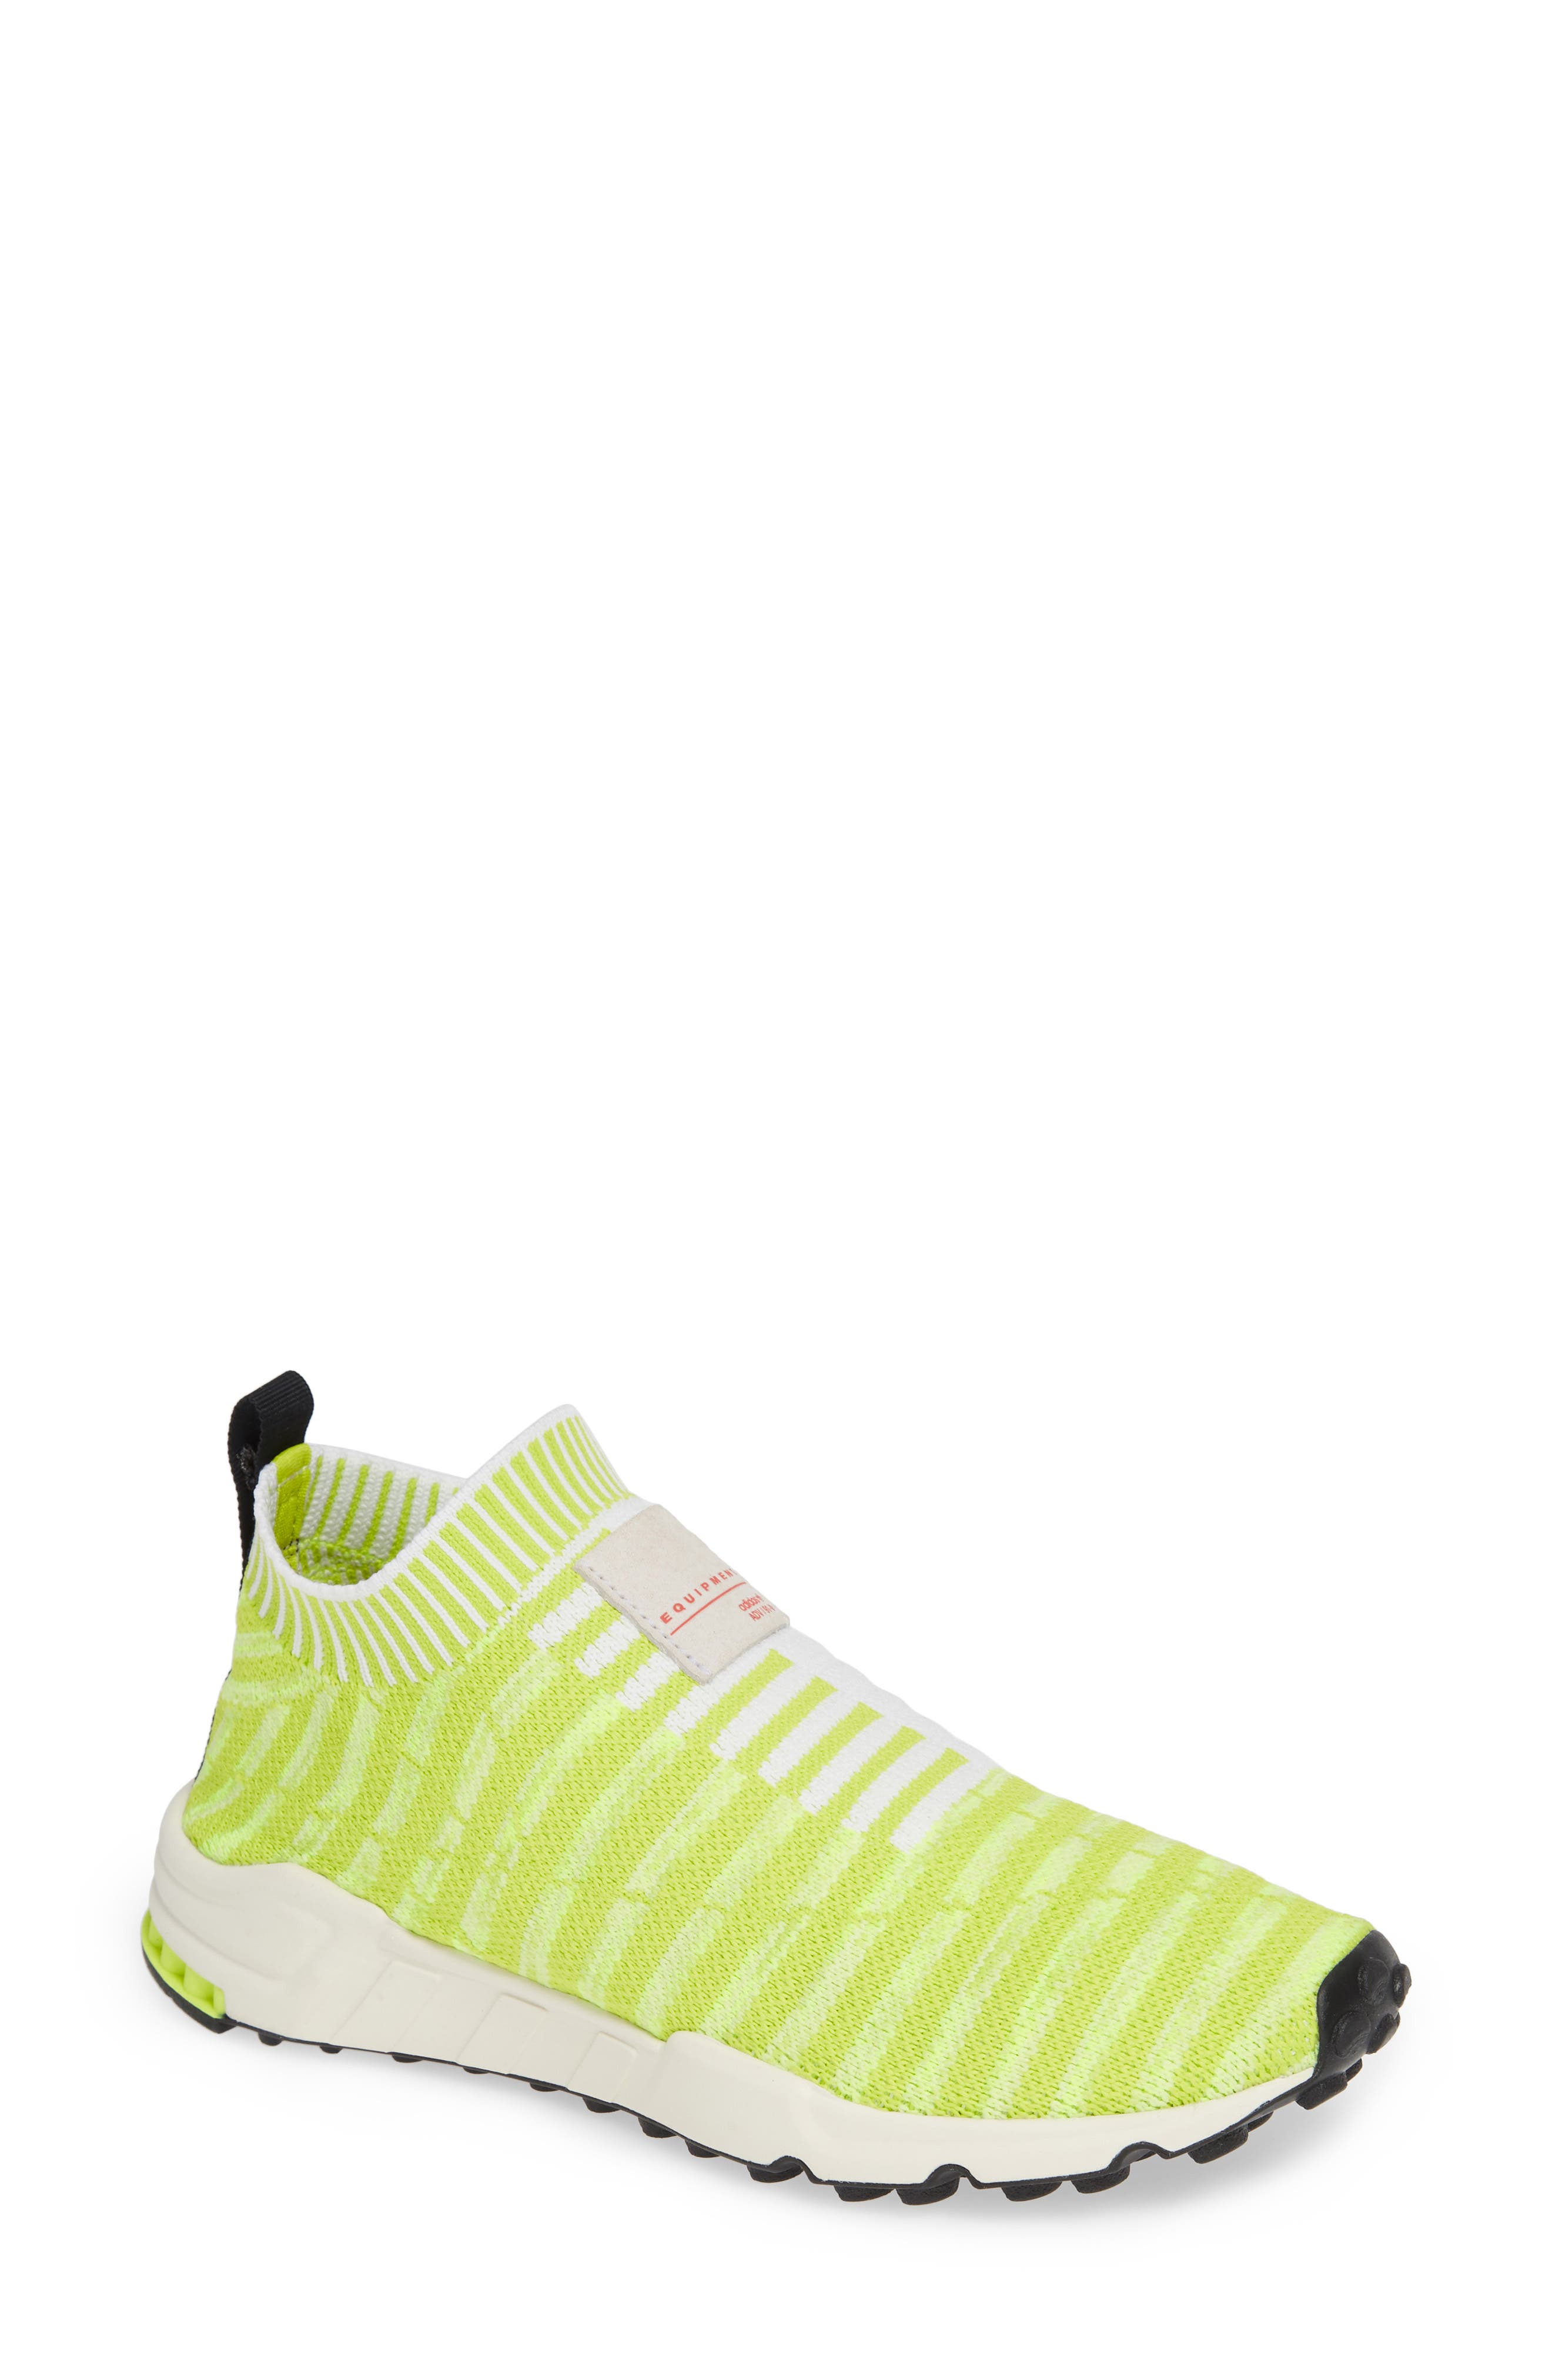 eqt support sock primeknit sneaker adidas